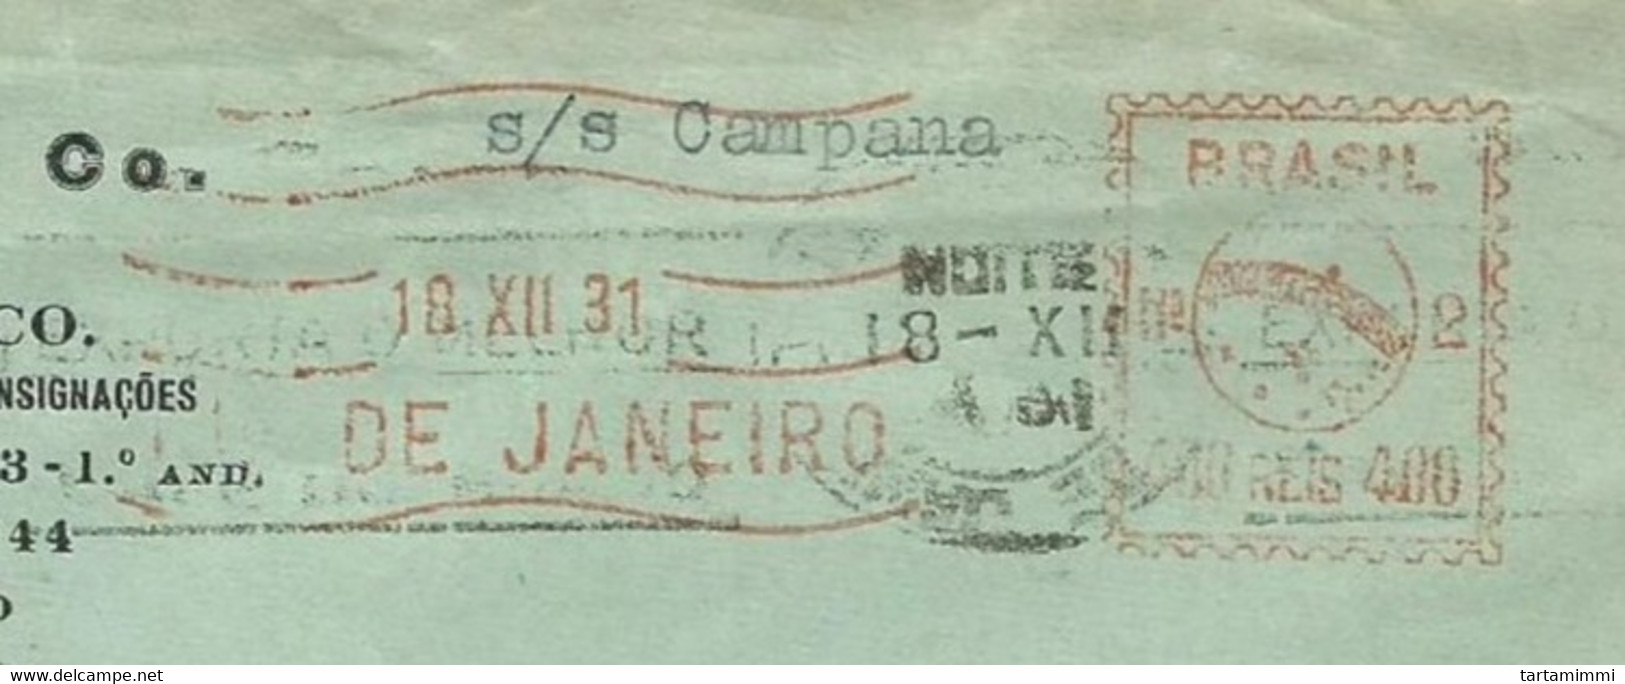 EMA METER STAMP FREISTEMPEL TYPE B1A BRASIL BRAZIL RIO DE JANEIRO 1931 BONESCHI S/S CAMPANA TO FRANCE - Frankeervignetten (Frama)